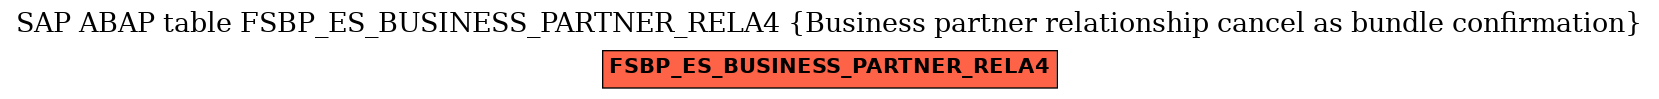 E-R Diagram for table FSBP_ES_BUSINESS_PARTNER_RELA4 (Business partner relationship cancel as bundle confirmation)